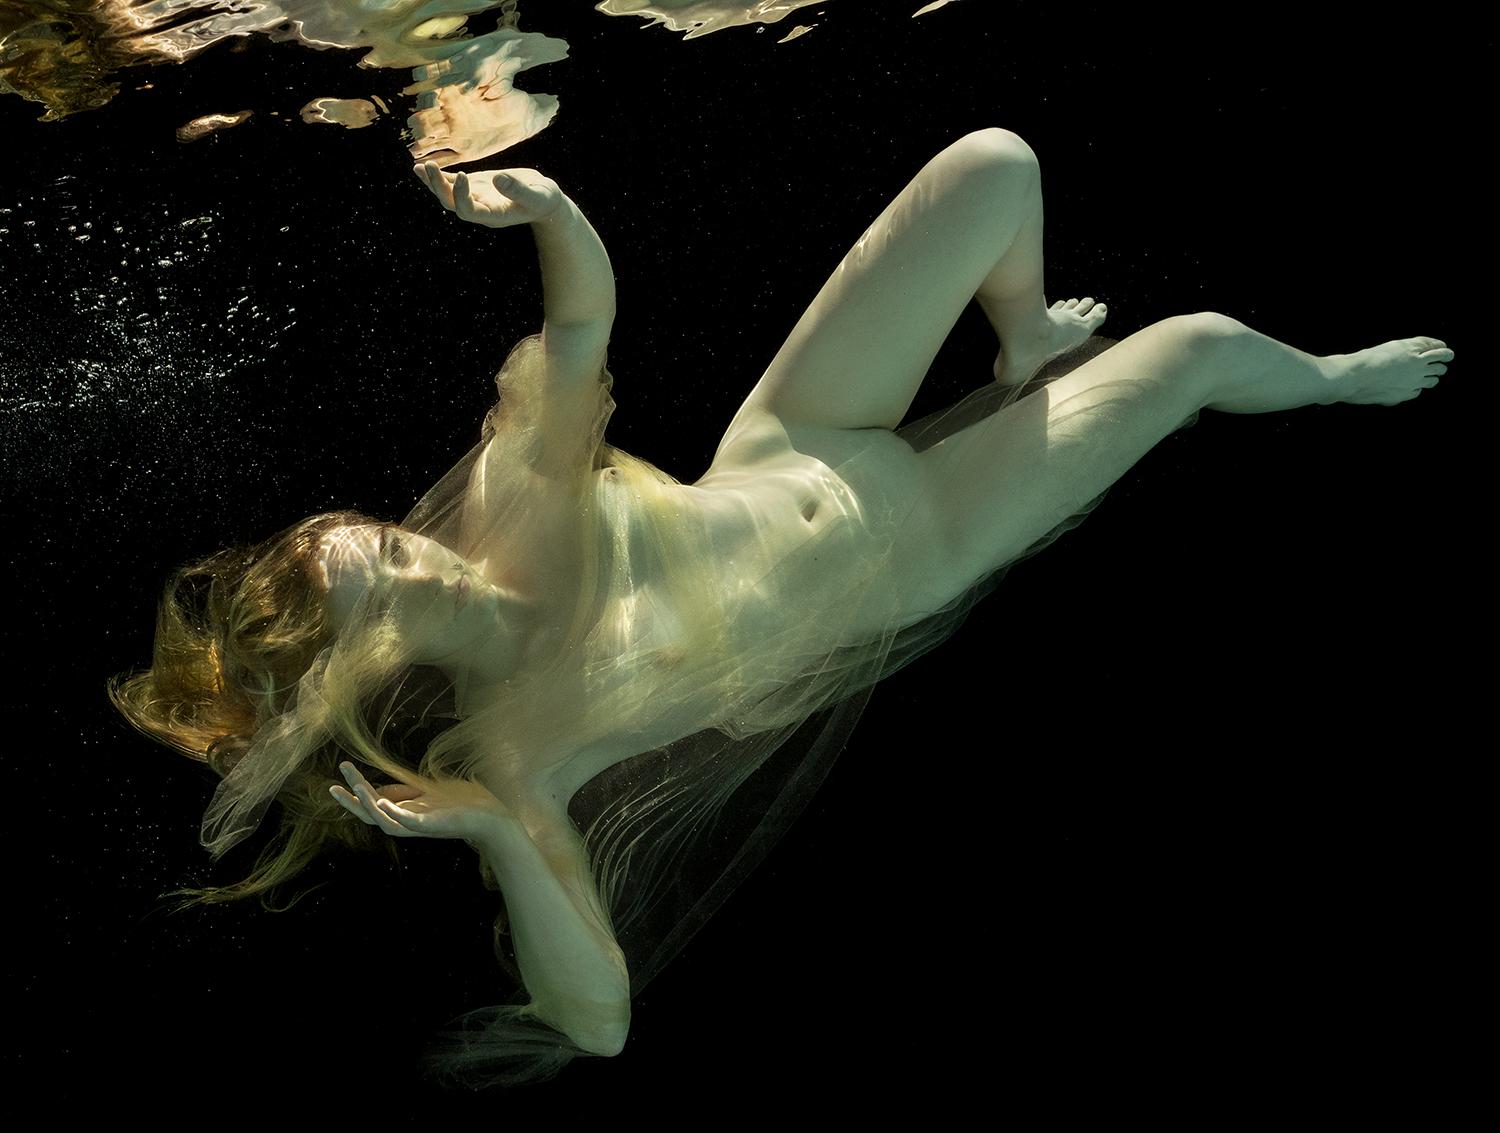 Danae and Zeus - underwater nude photograph - print on paper 17.5x22